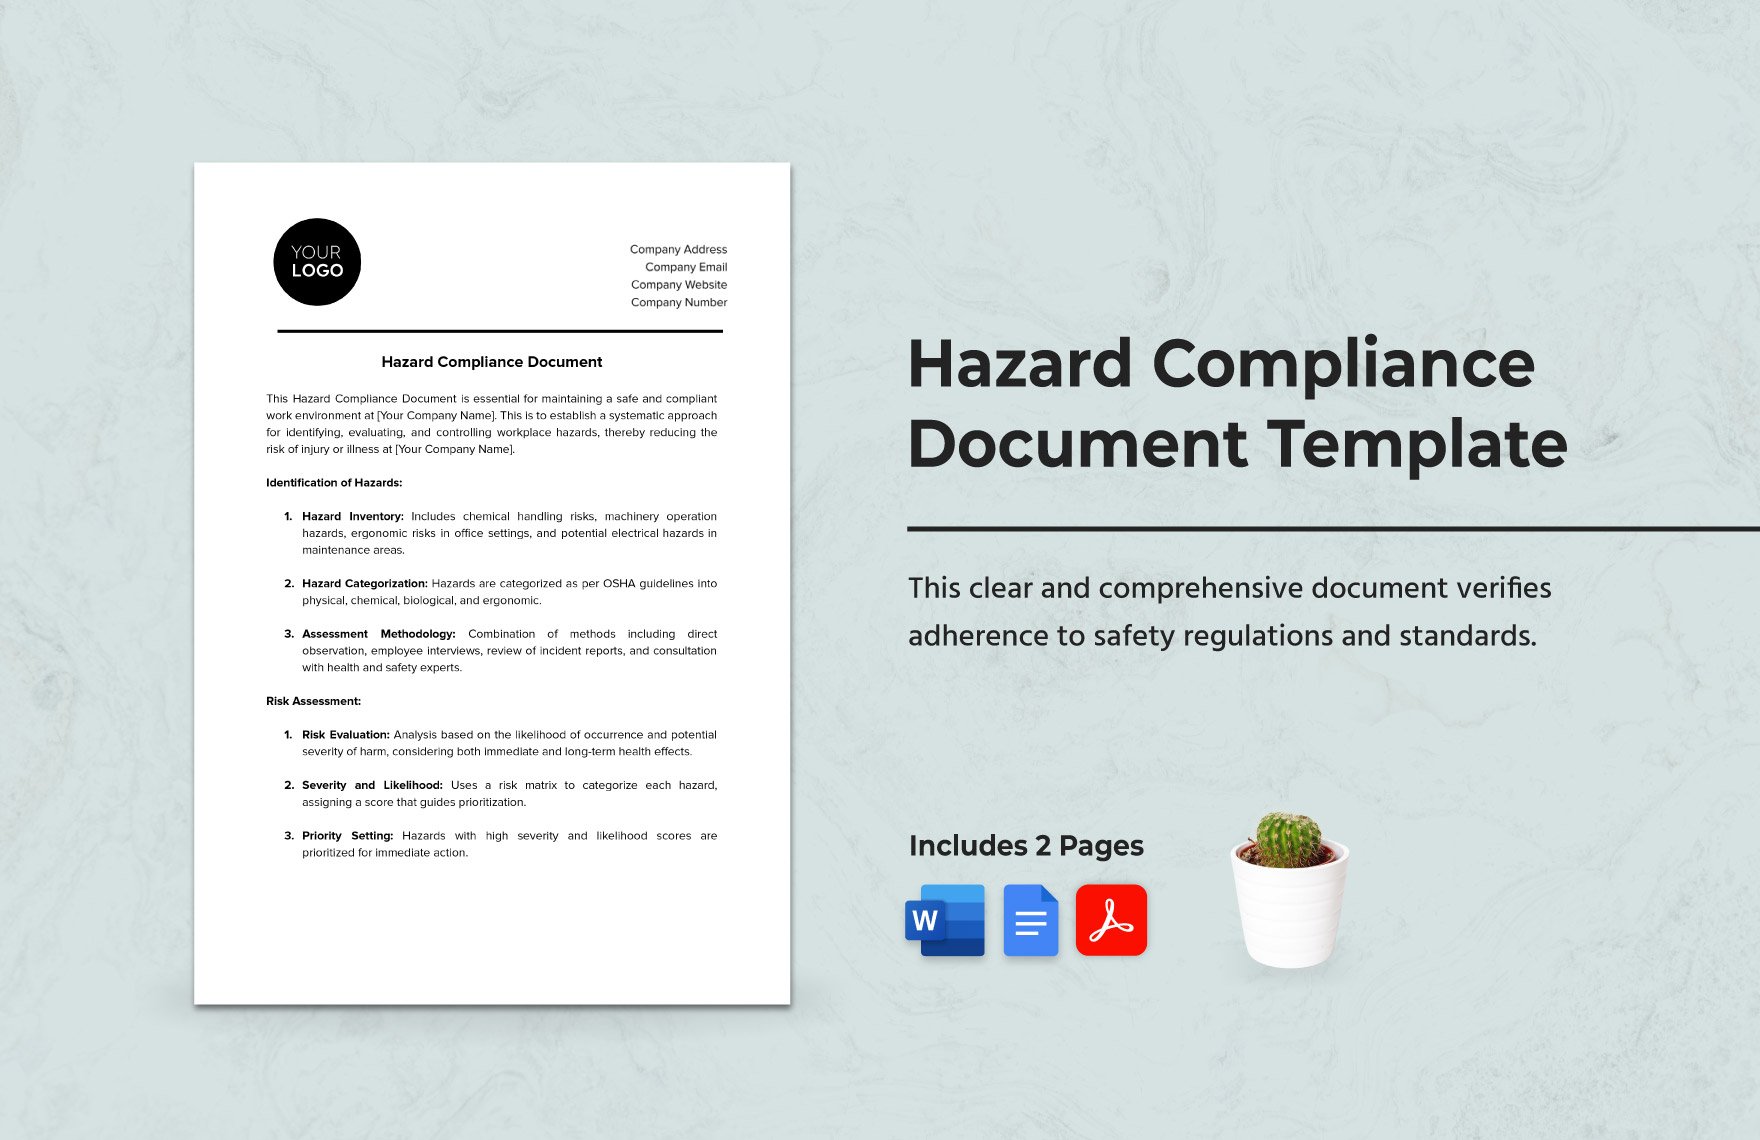 Hazard Compliance Document Template in Word, Google Docs, PDF